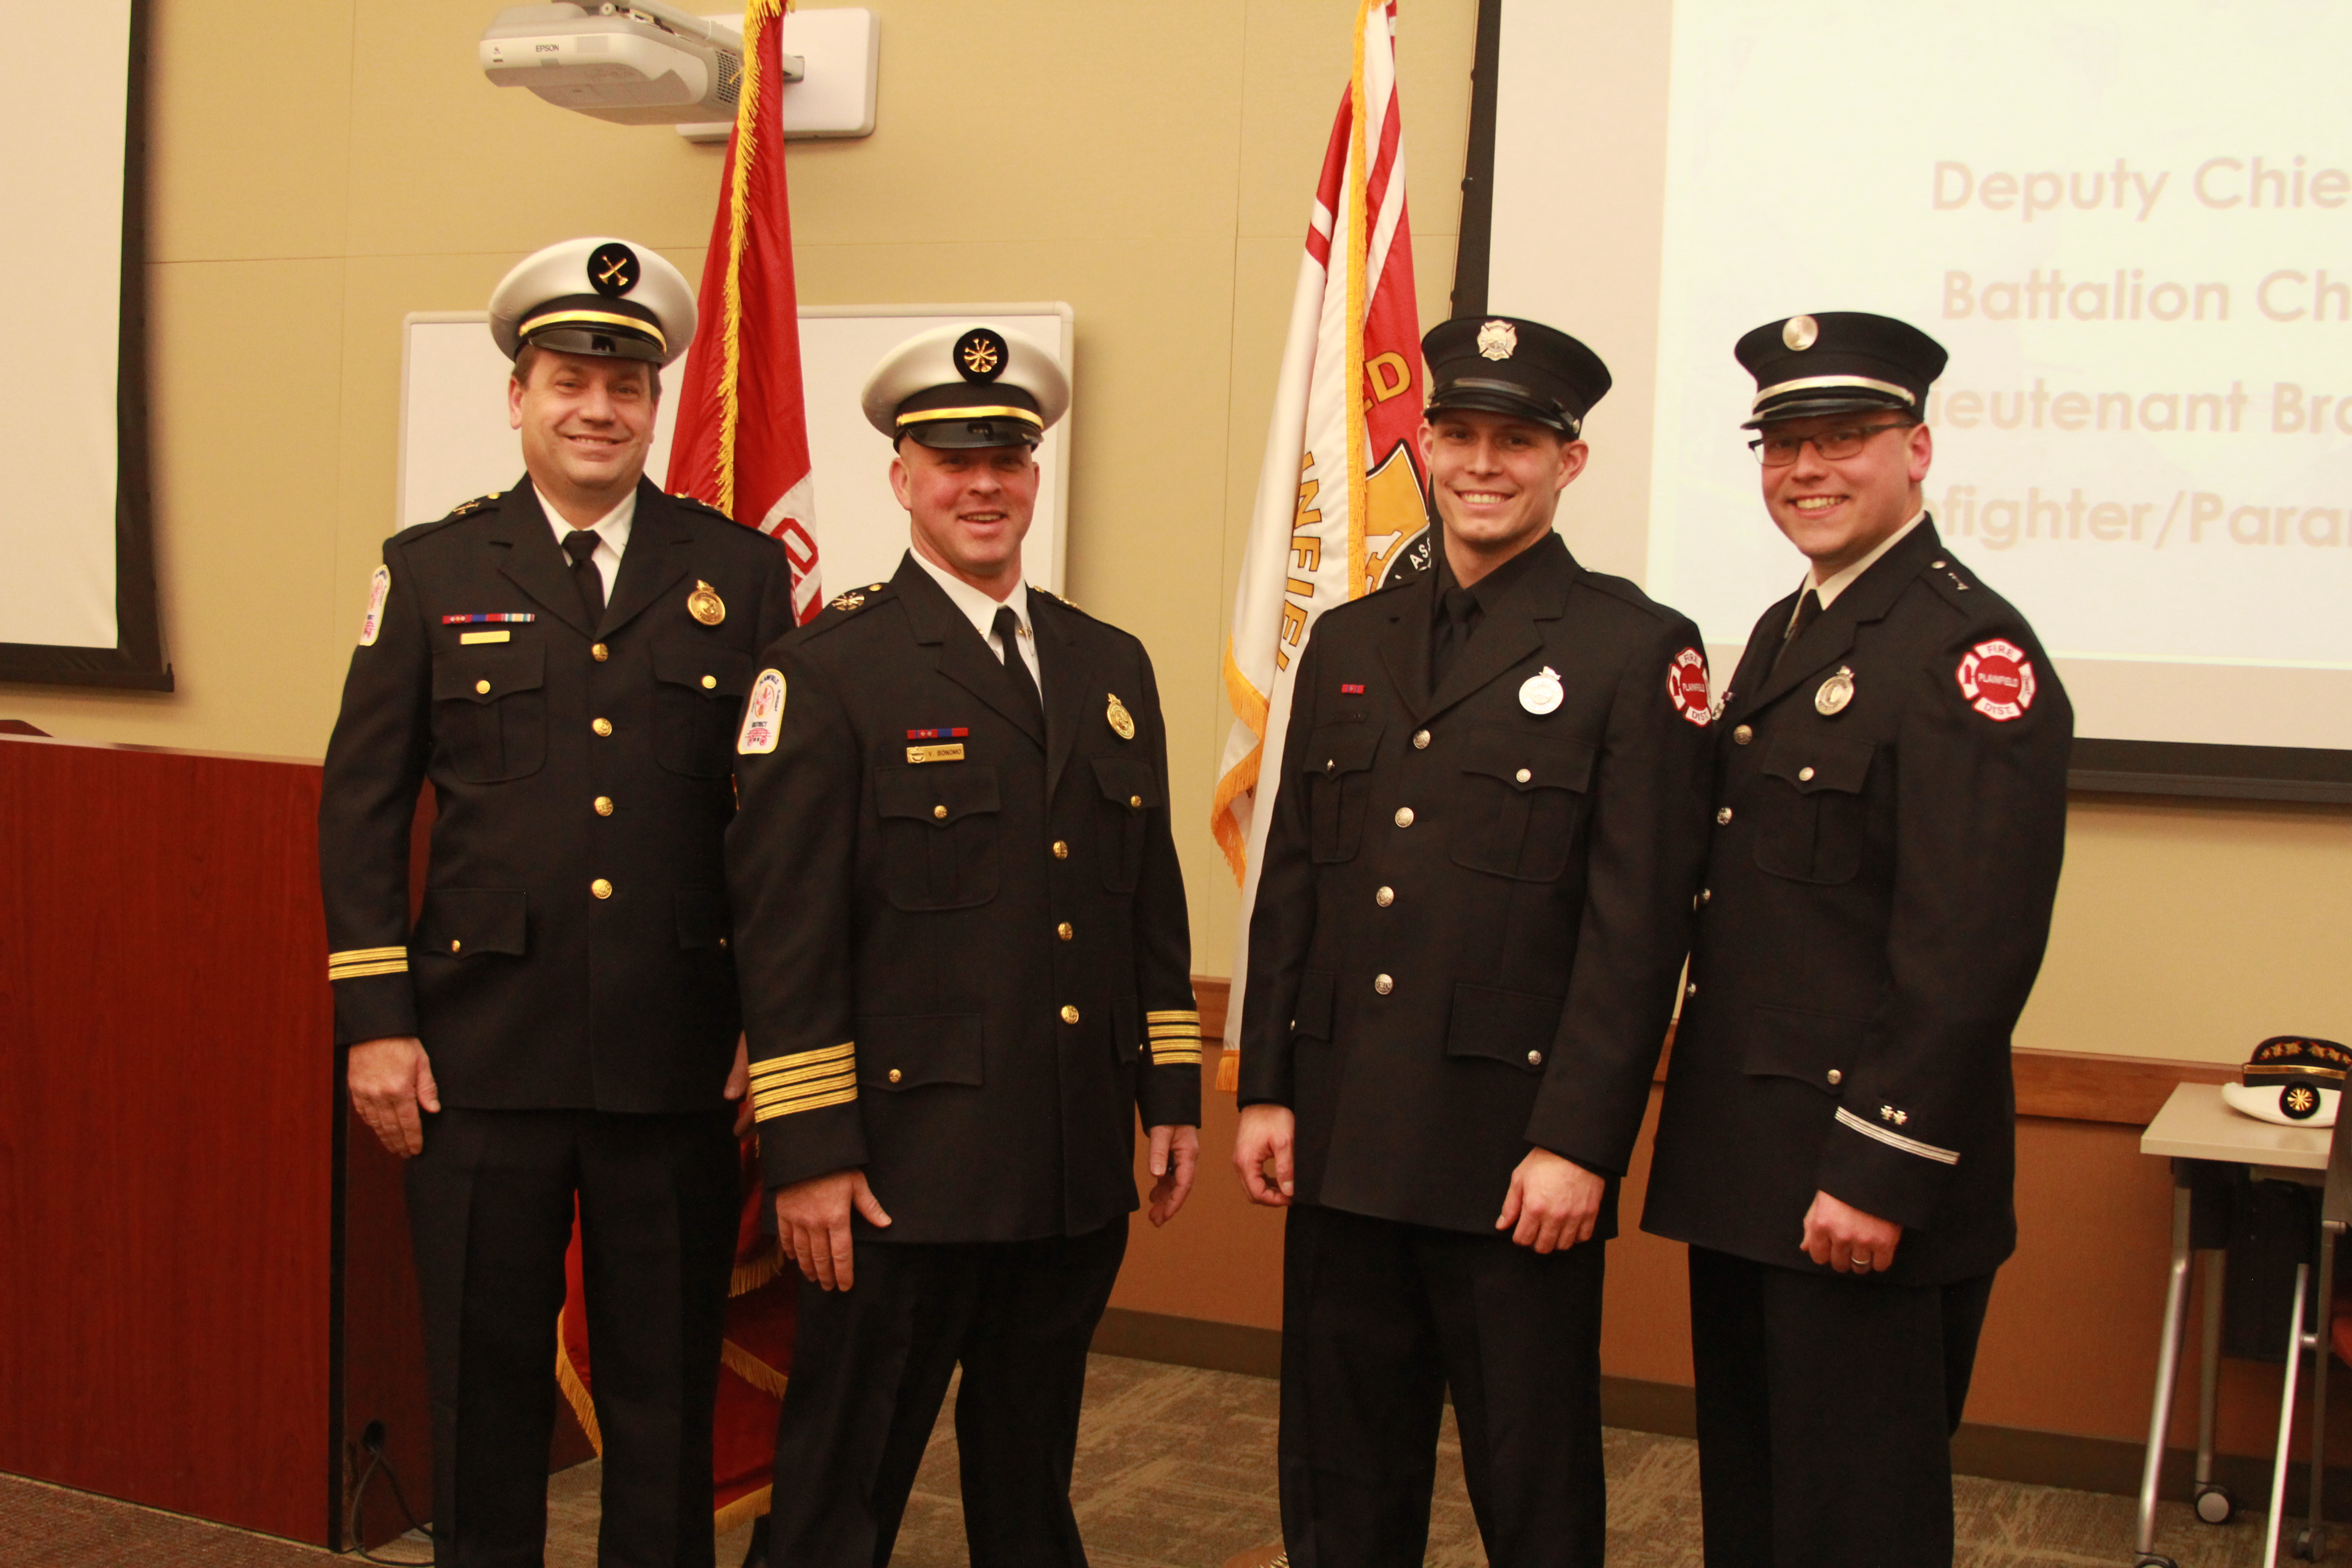 Pictured left to right: Battalion Chief Charles Kraft, Deputy Chief Vito Bonomo III, Firefigher/Paramedic Kevin Teper & Lieutenant Brandon Vainowski